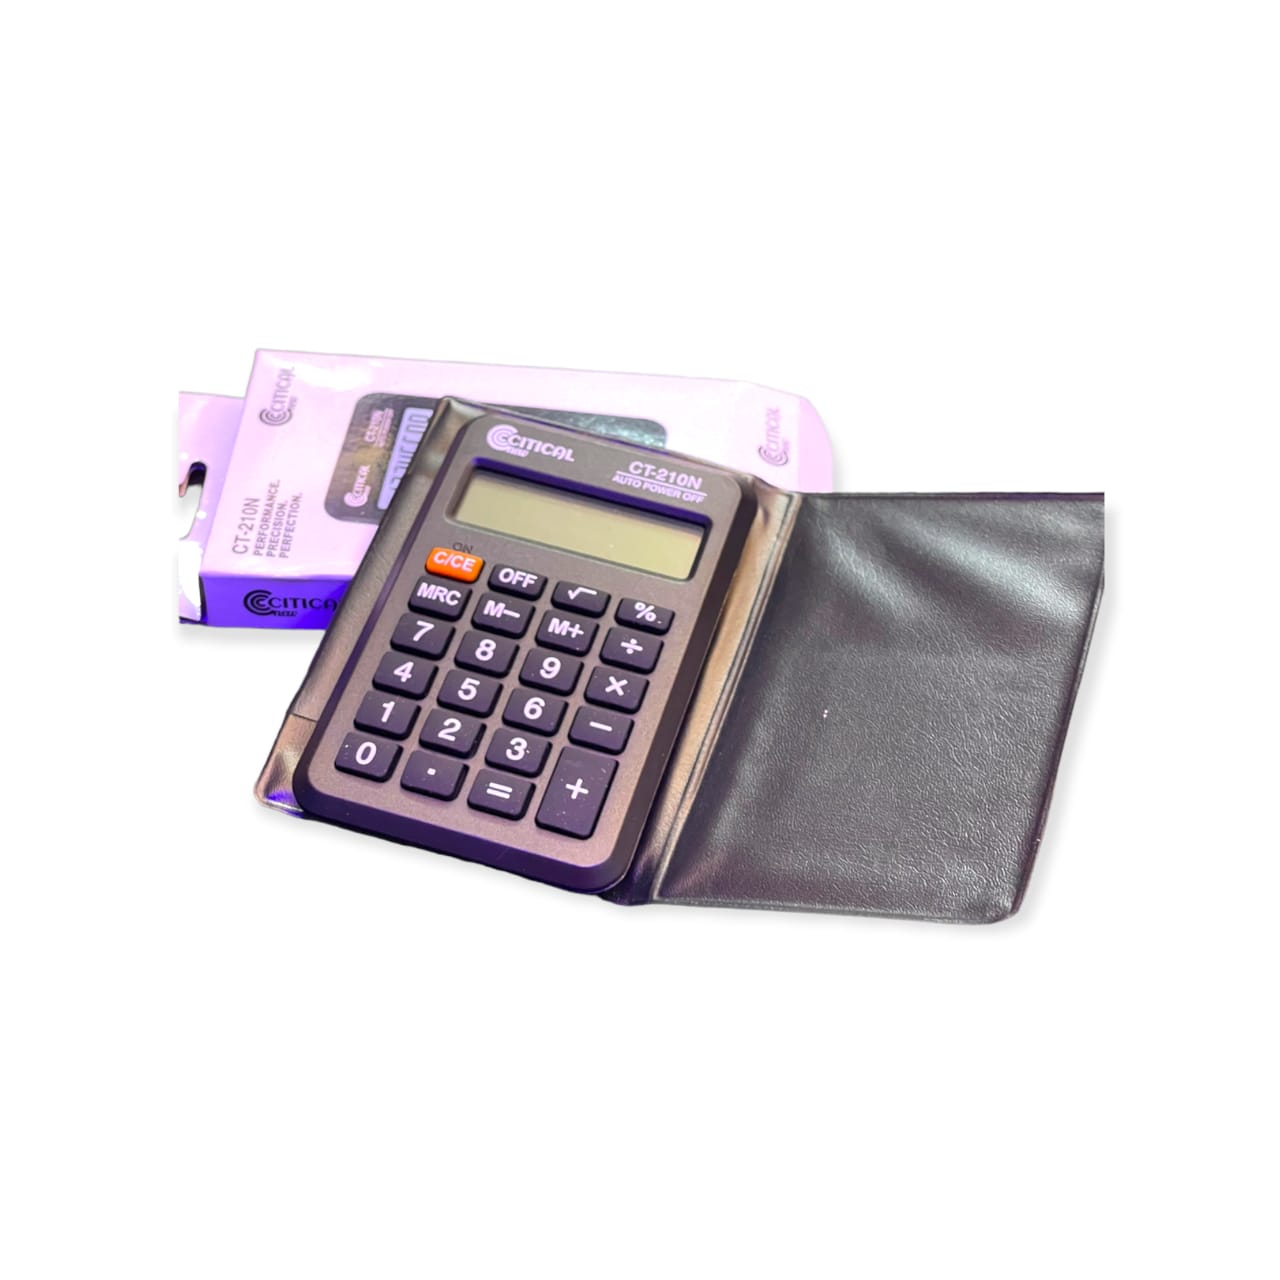 Citical CT-210N Pocket Calculator